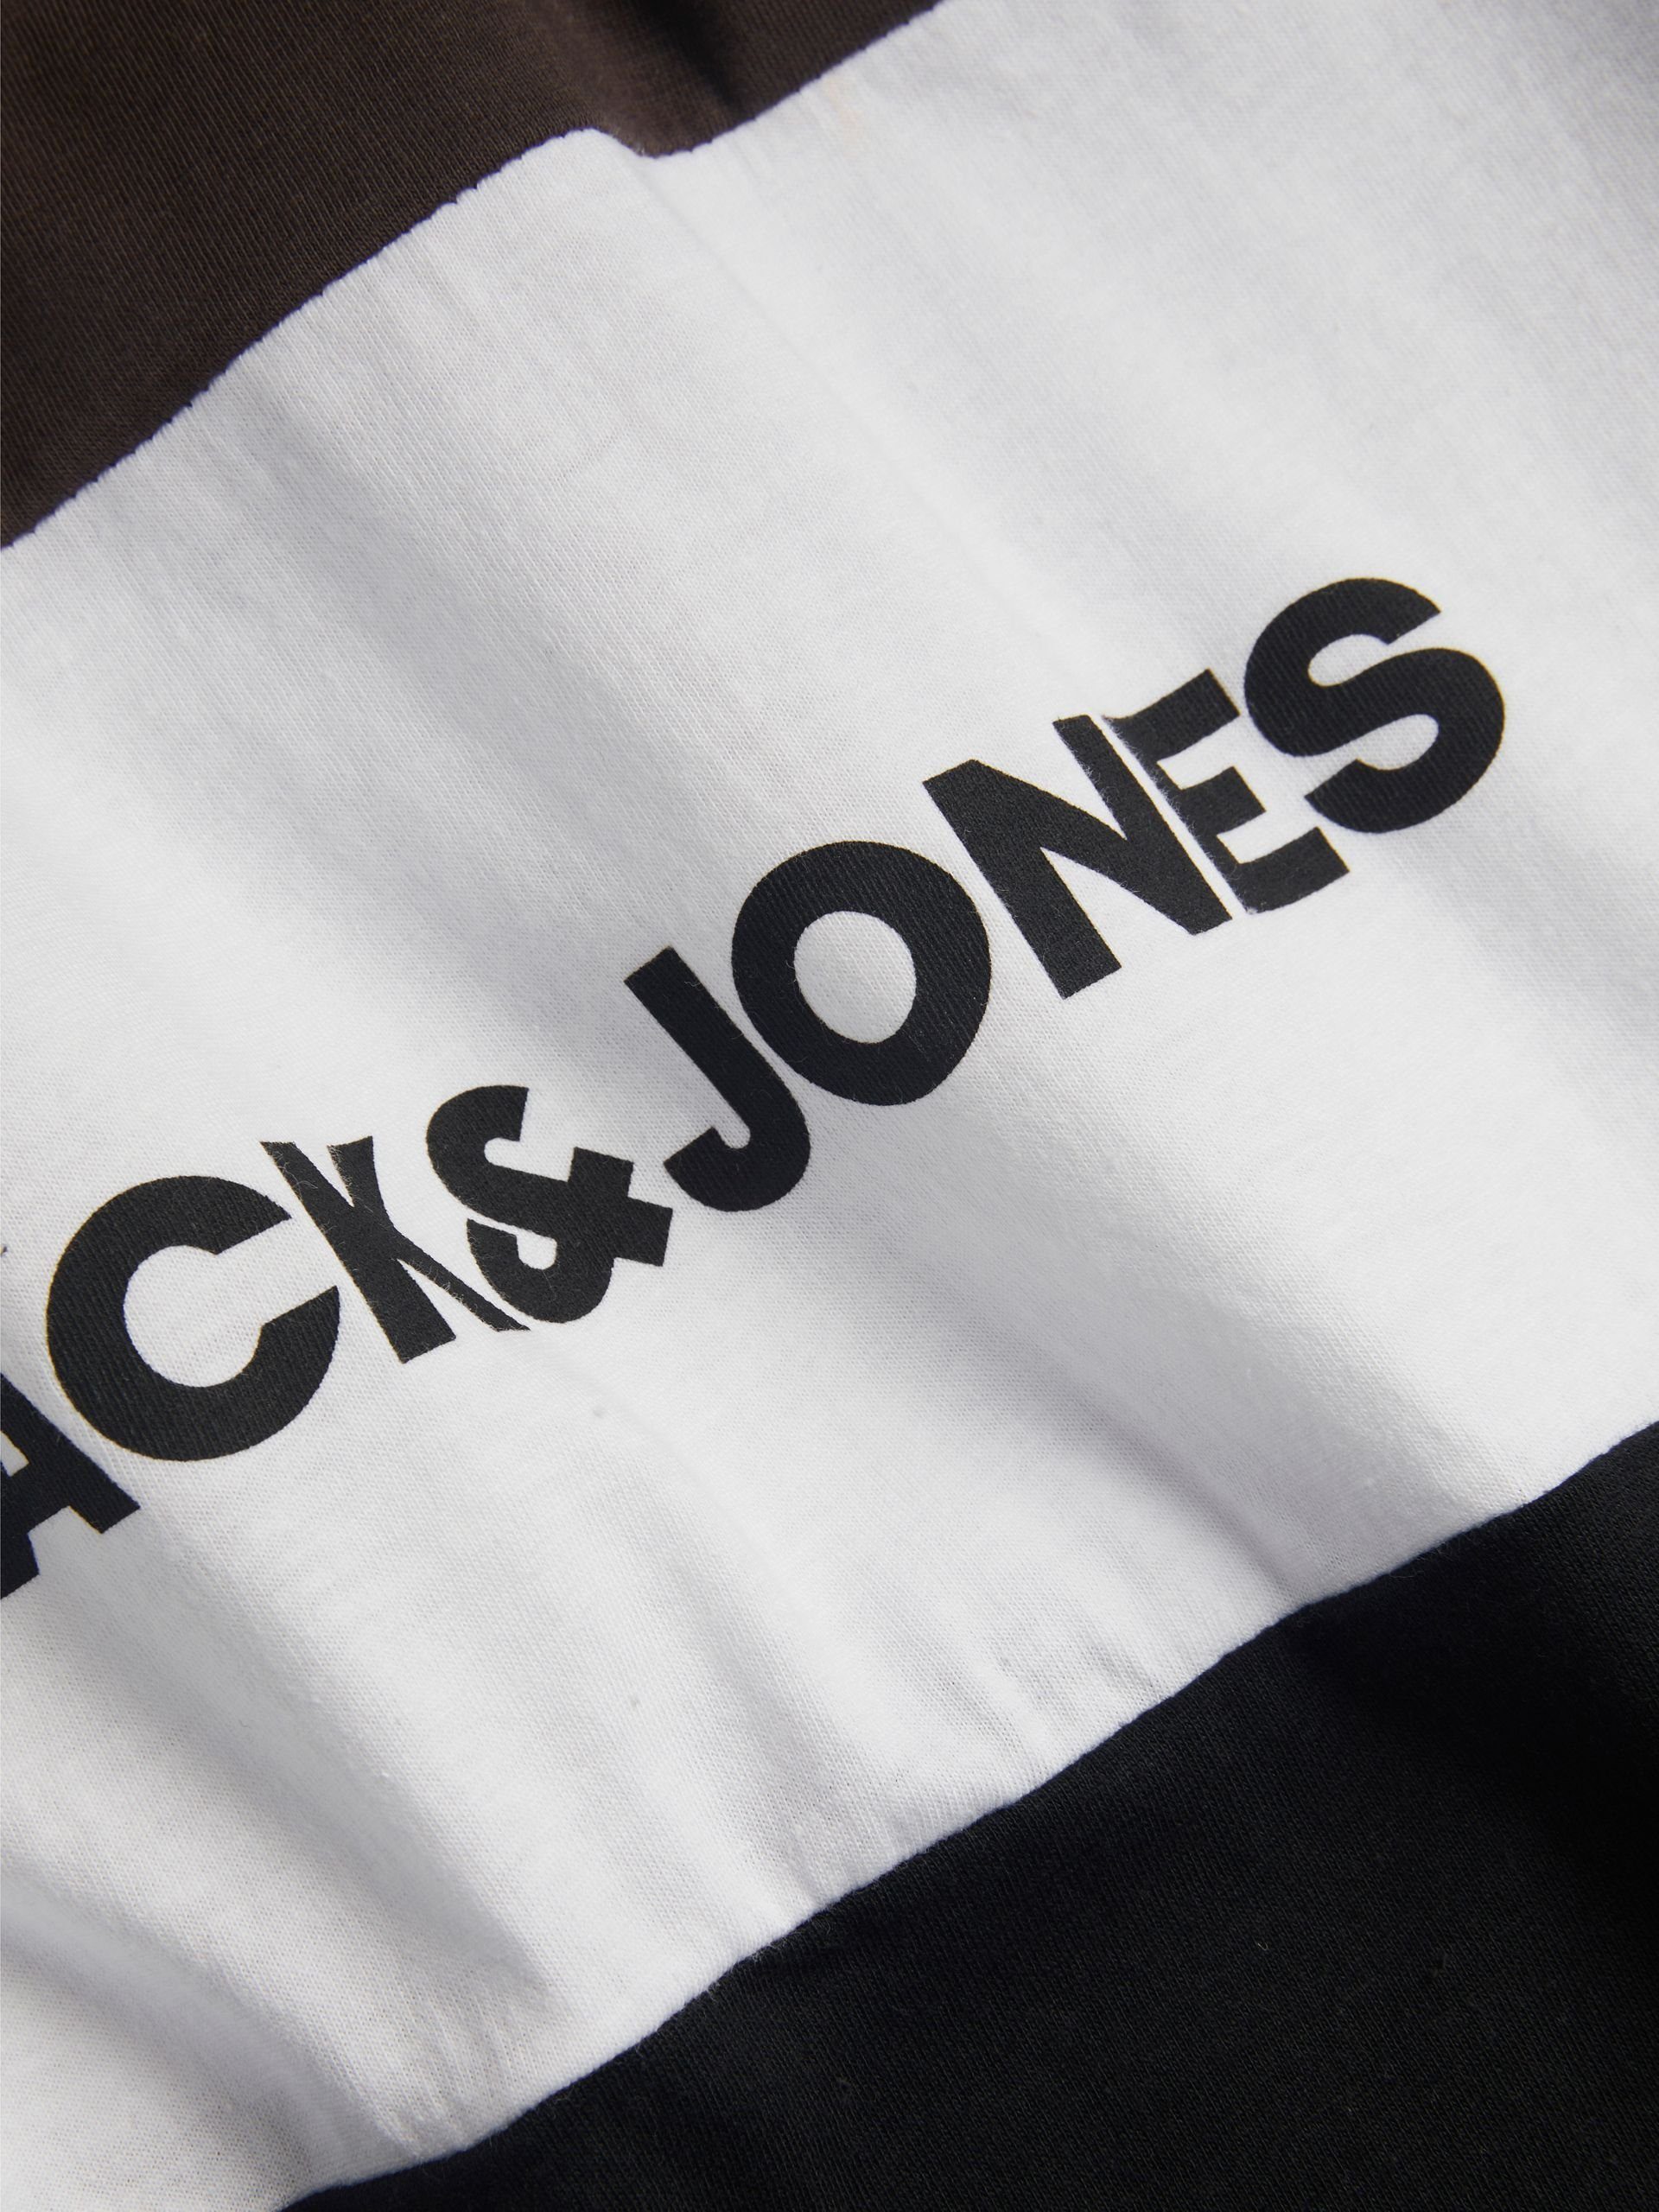 T-Shirt TEE JNR Jack & JJELOGO mulch Jones Junior BLOCKING